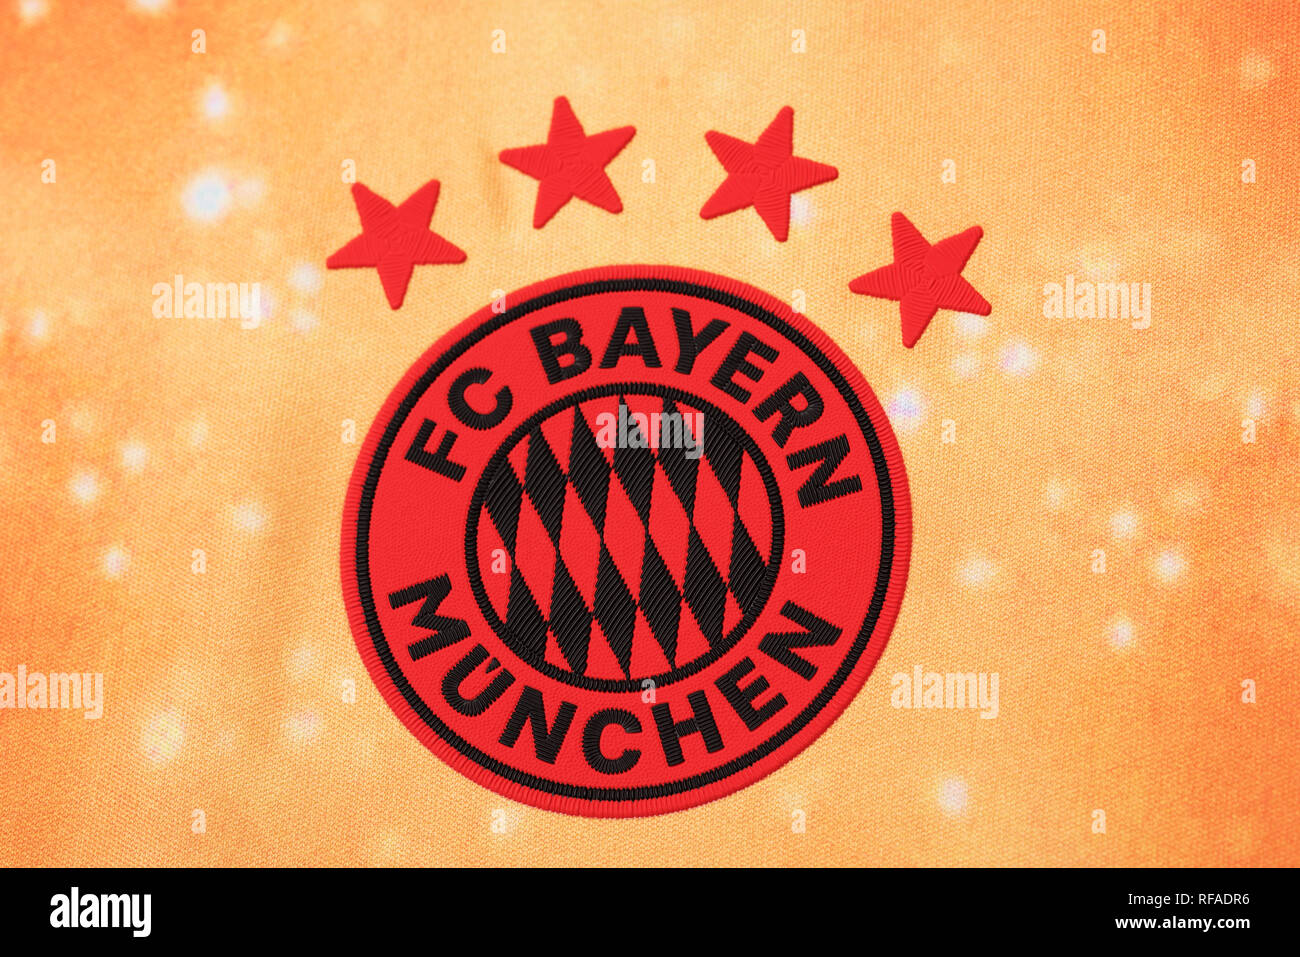 Le FC Bayern Munchen limited edition EA Sports dans le New Jersey. Banque D'Images